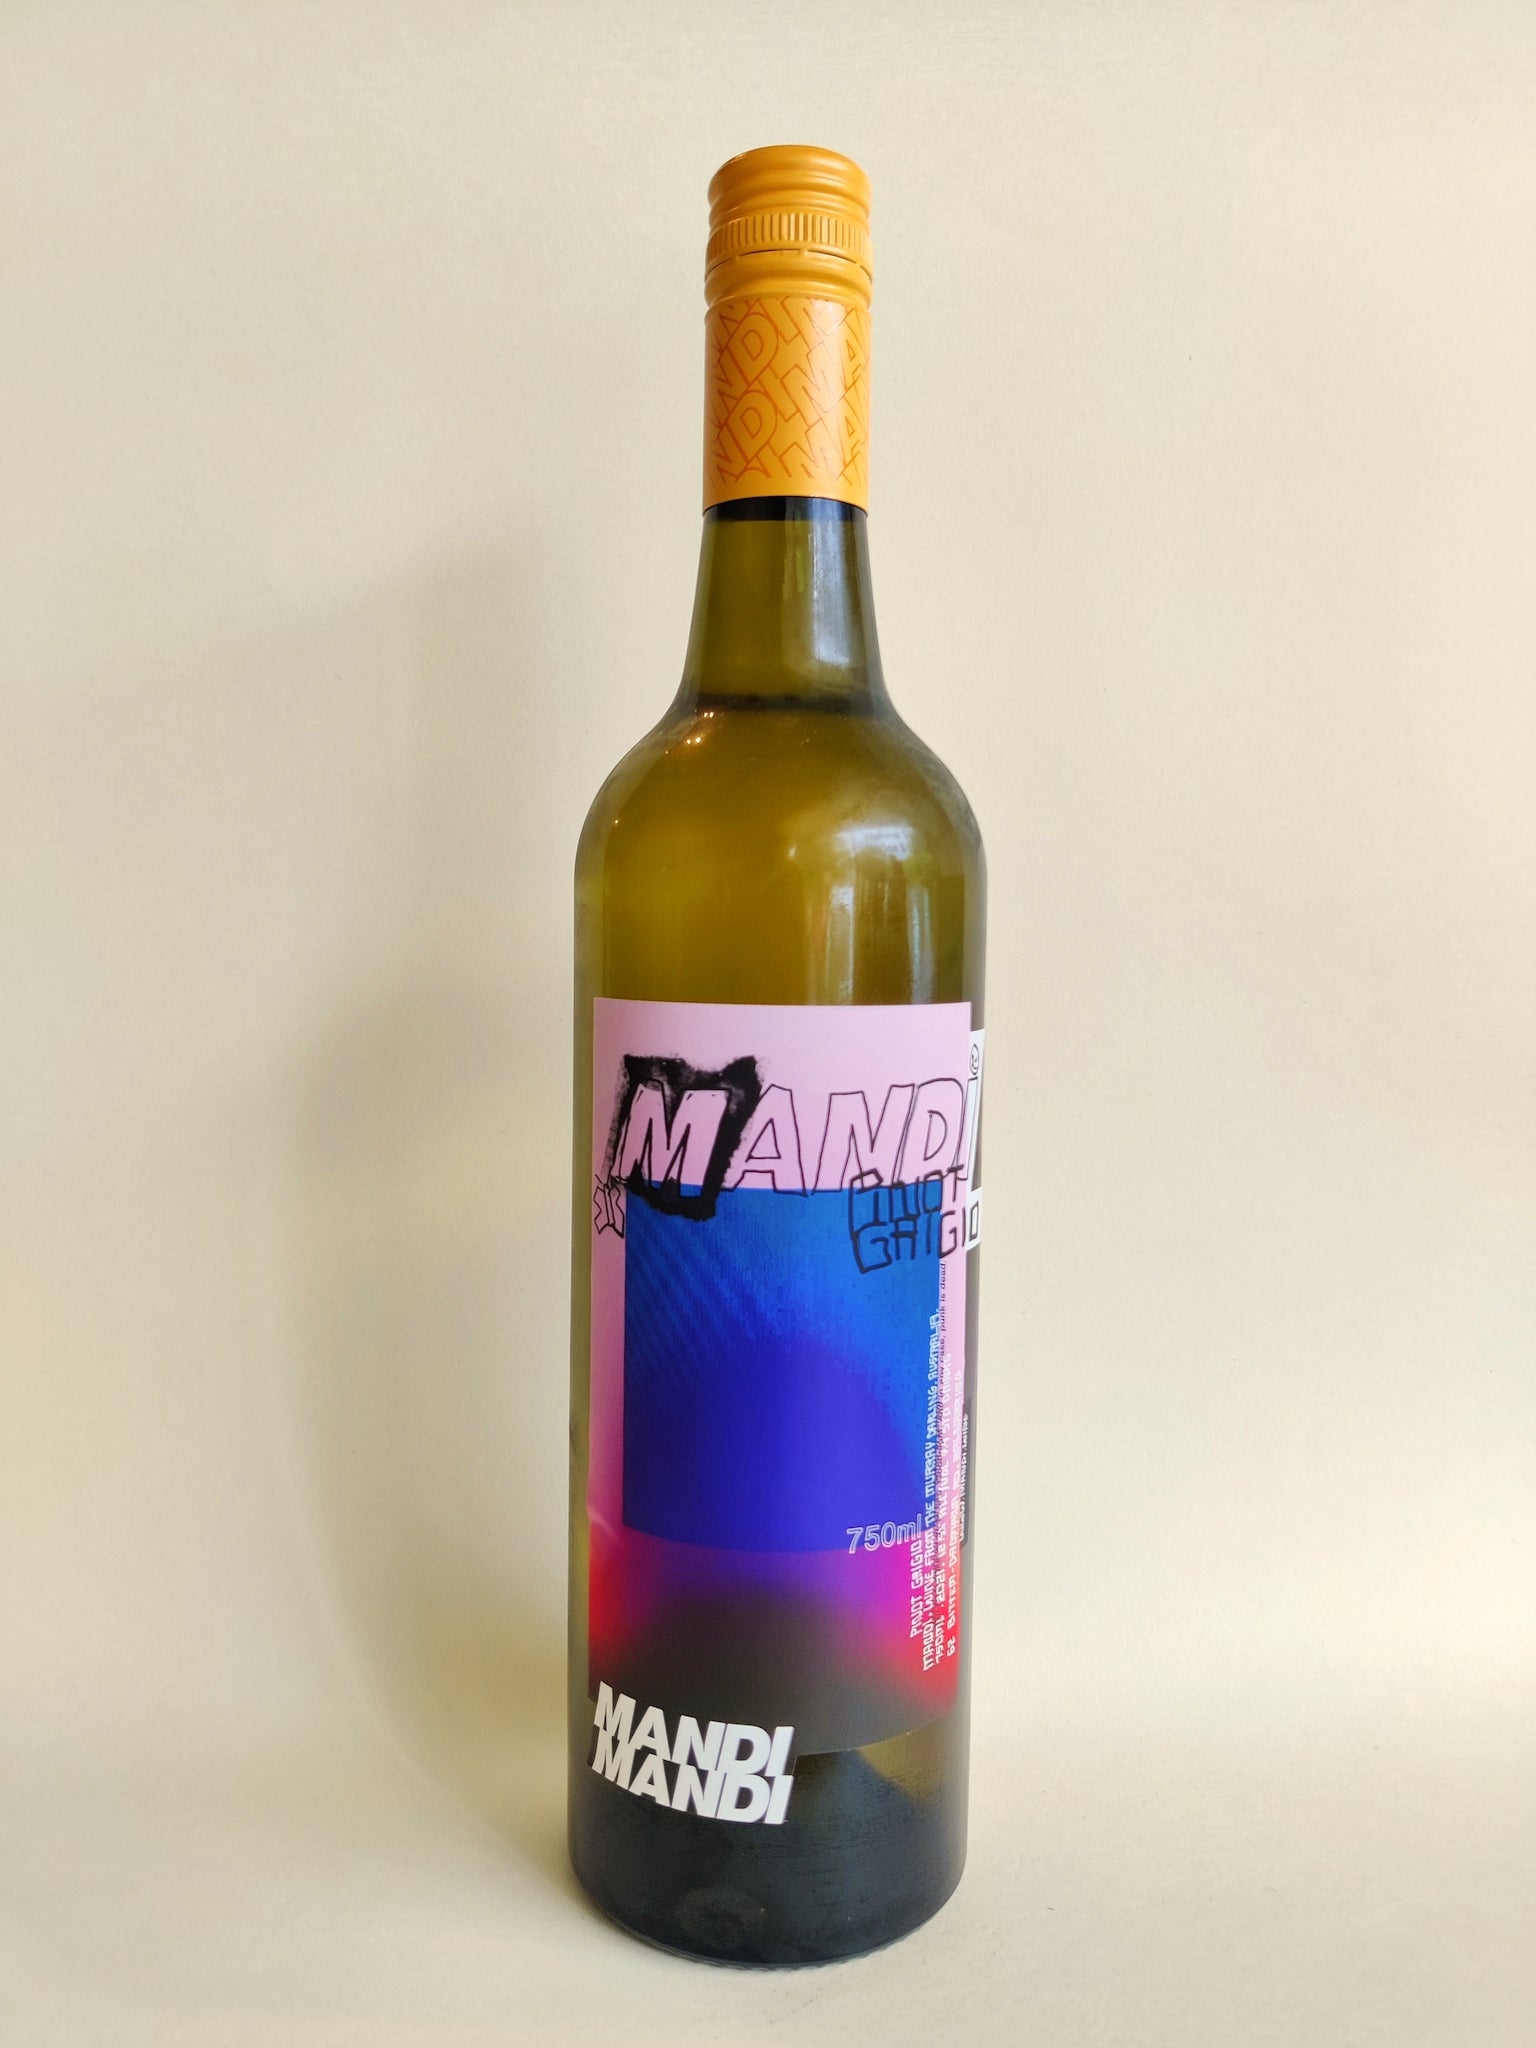 A bottle of MANDI Pinot Grigio from Mildura, Victoria. 